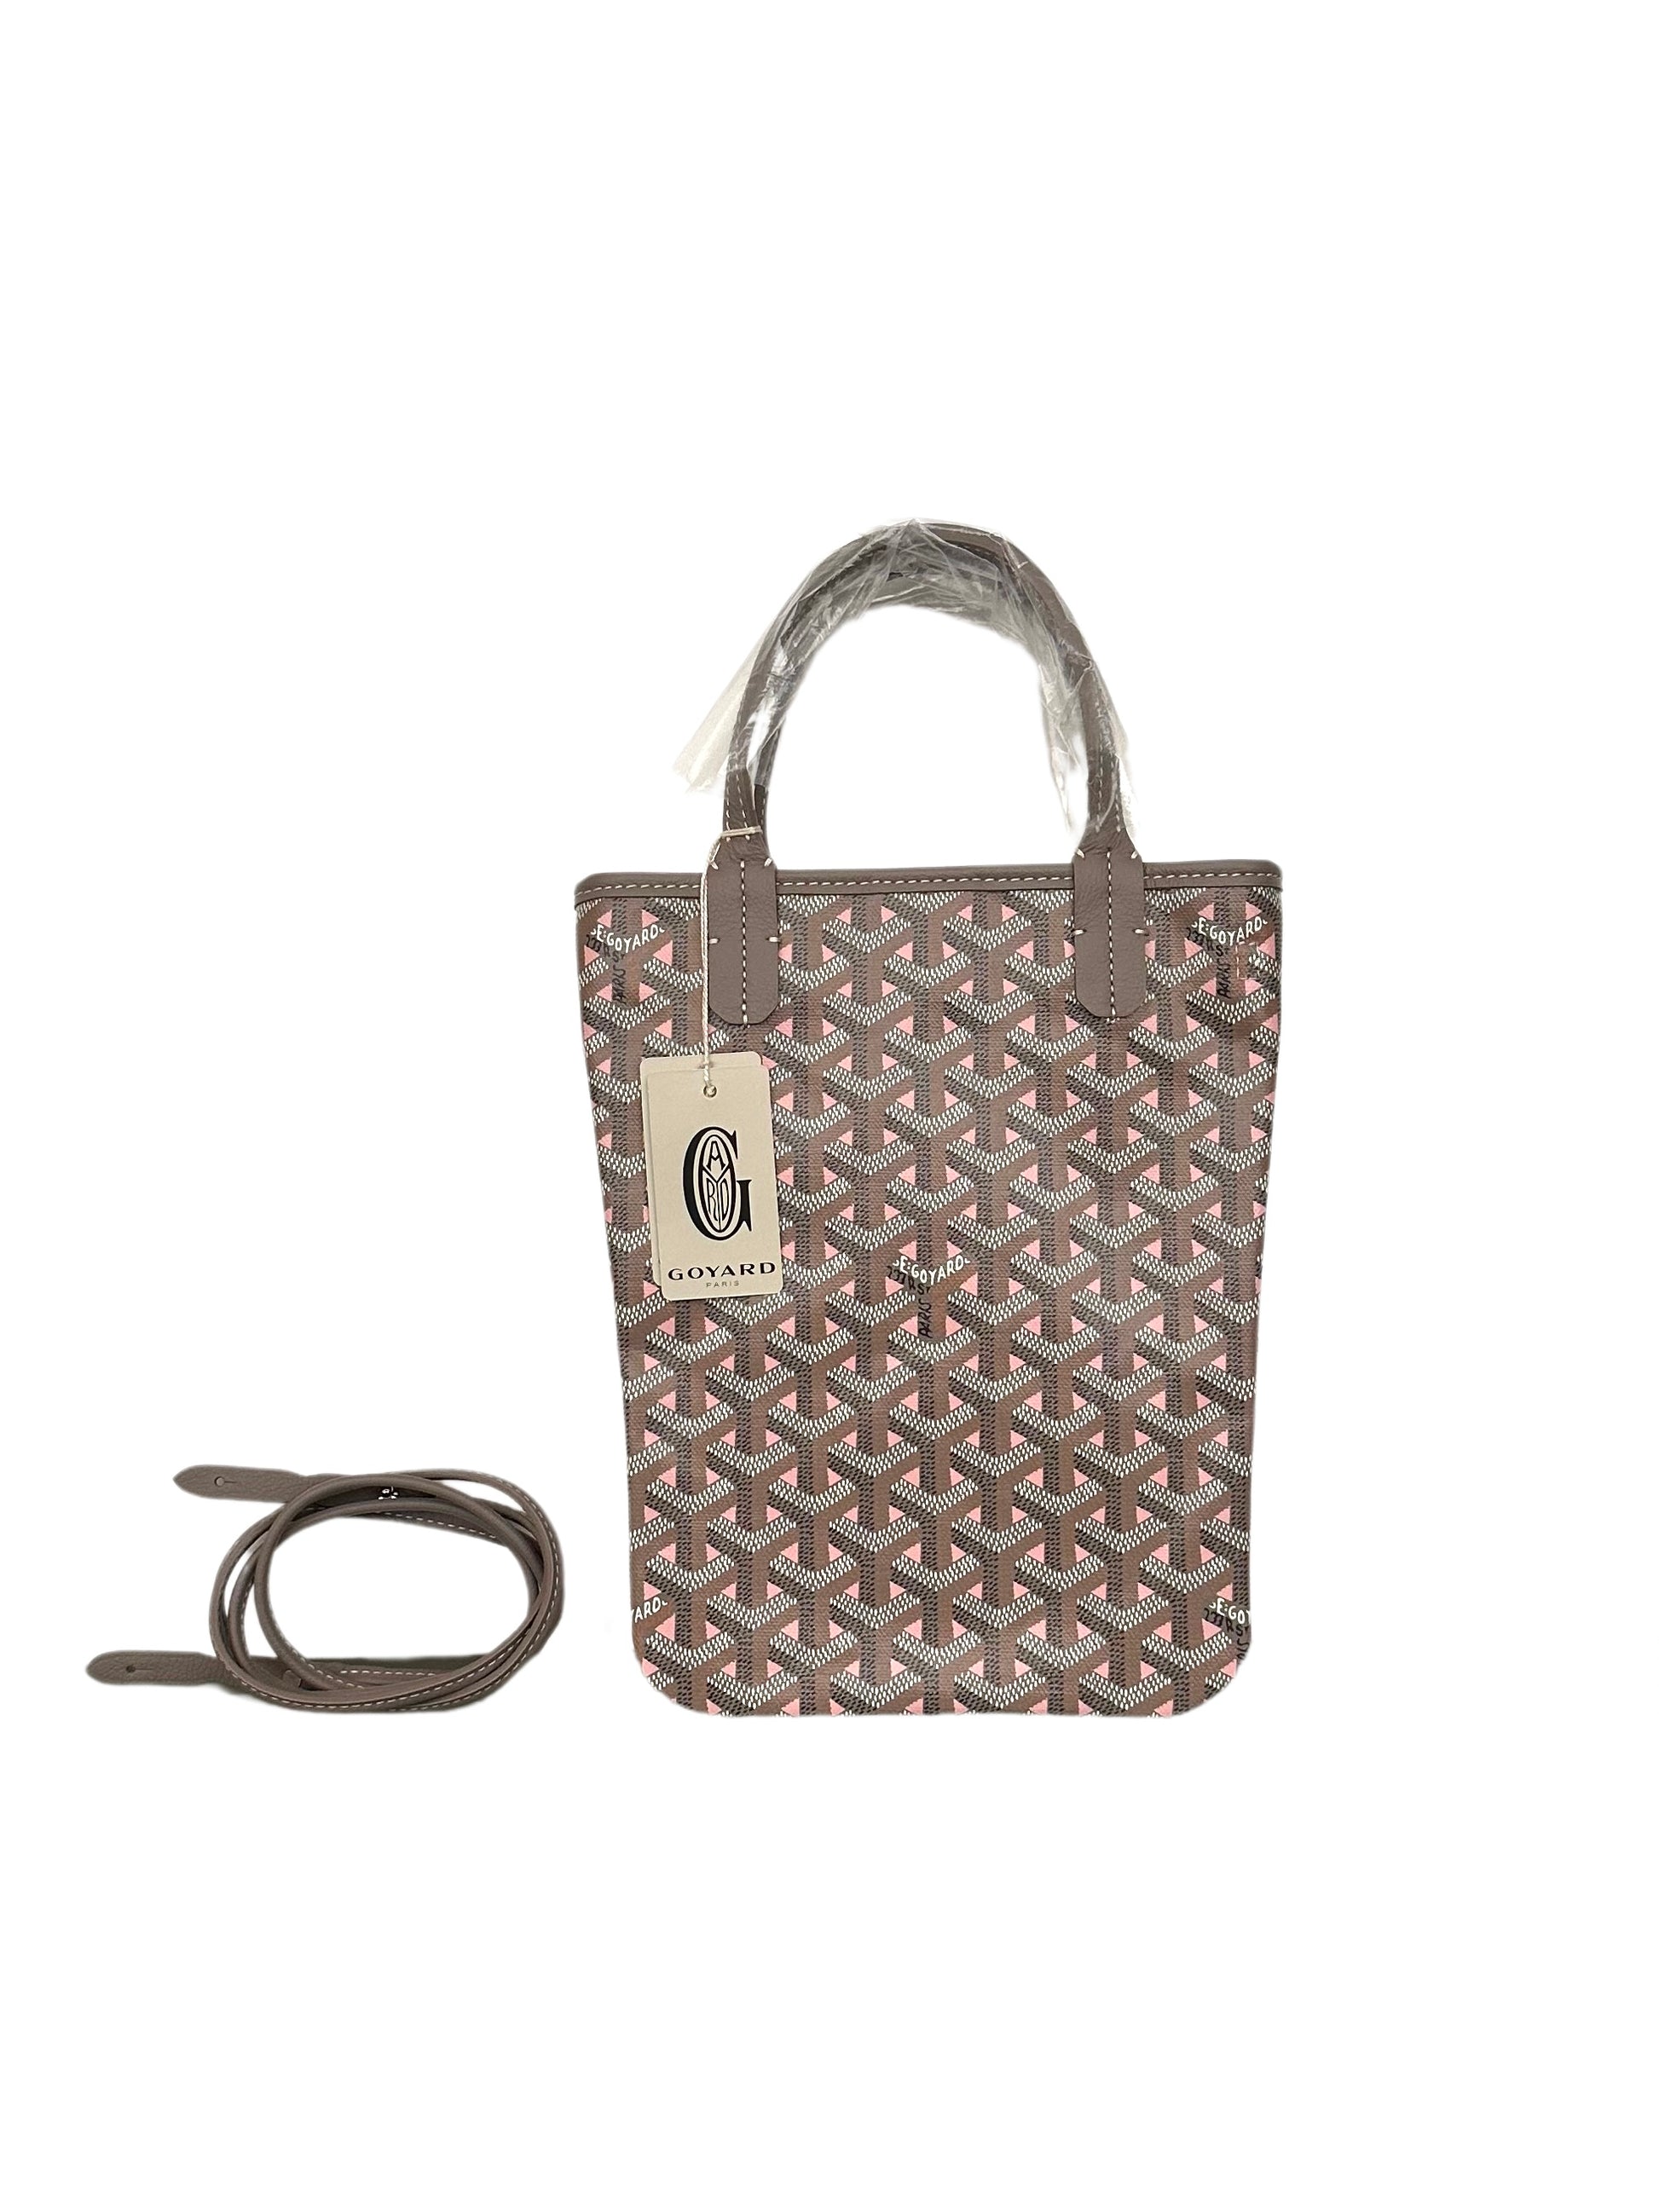 Goyard Limited Edition Claire Voie Rose Pink St Louis PM Tote Bag